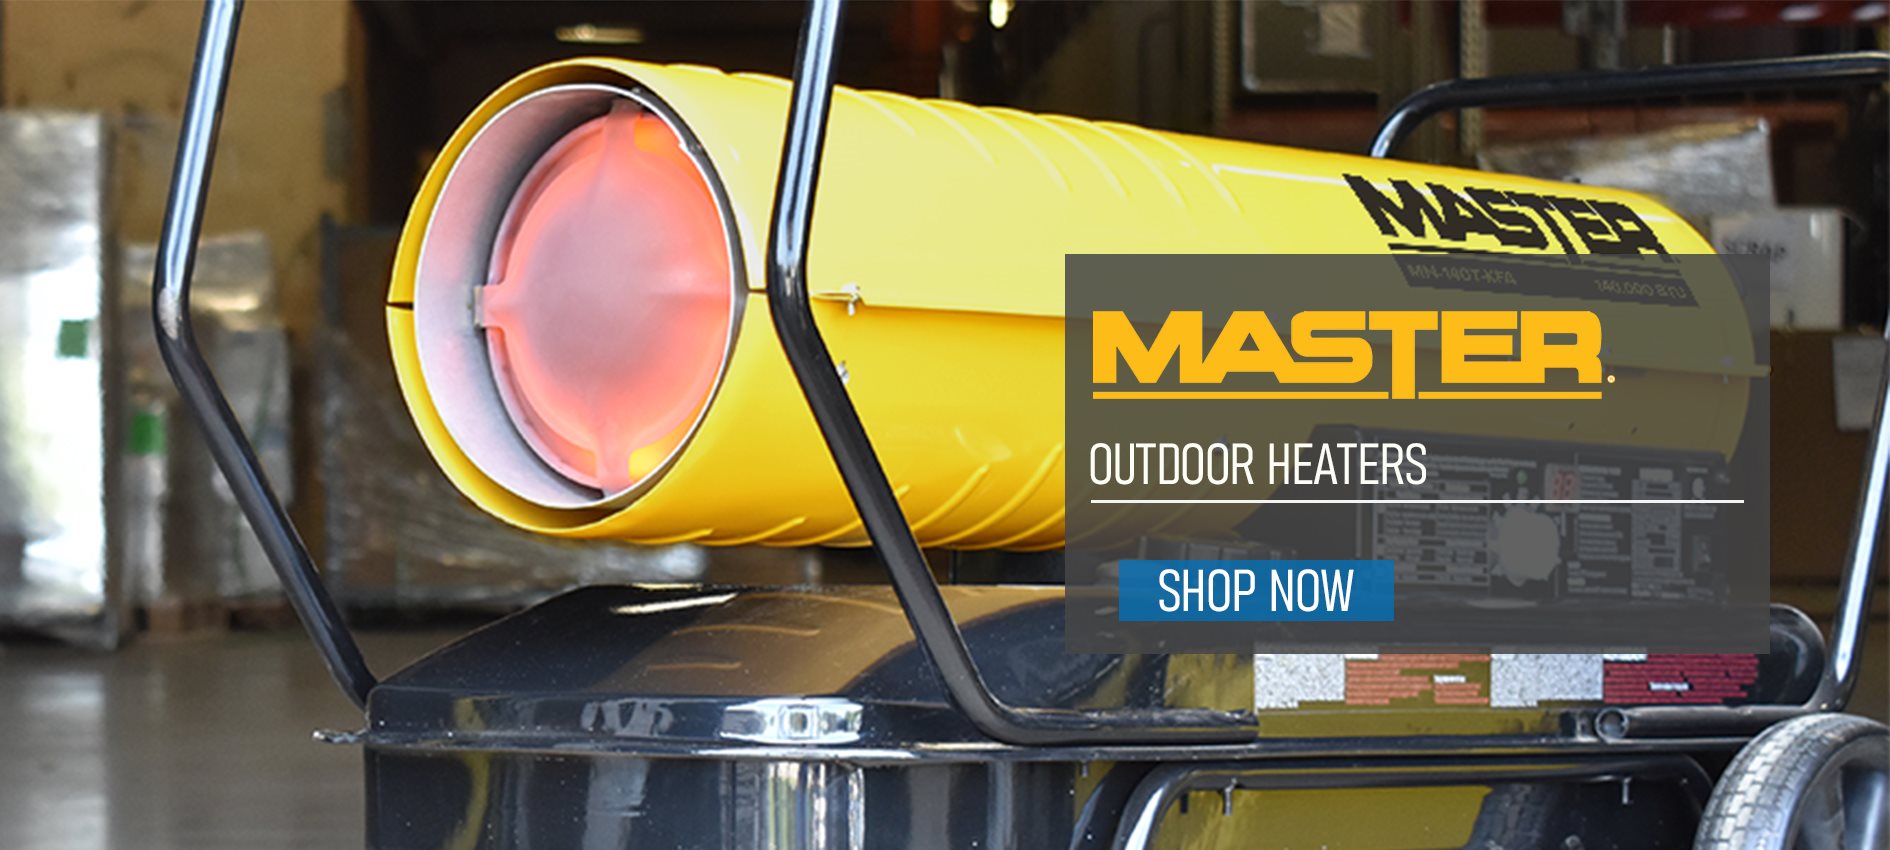 Master Outdoor Heaters